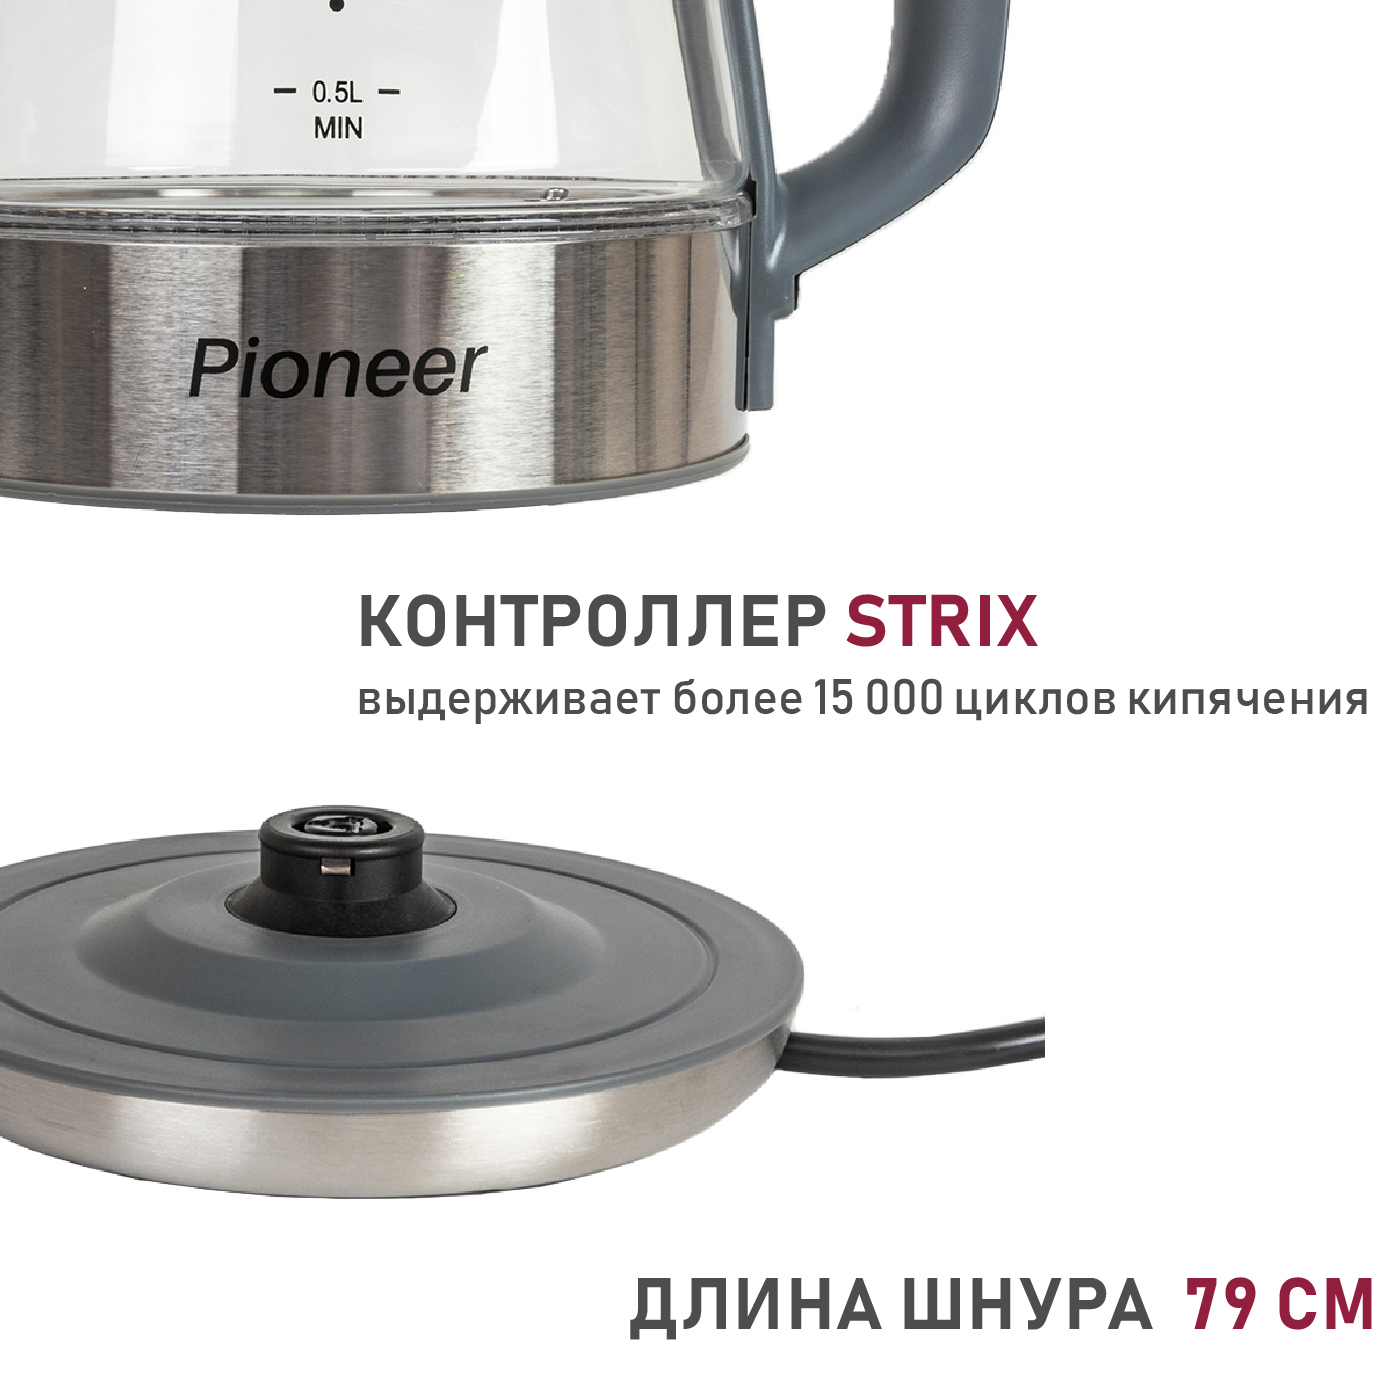 Чайник Pioneer KE815G graphite